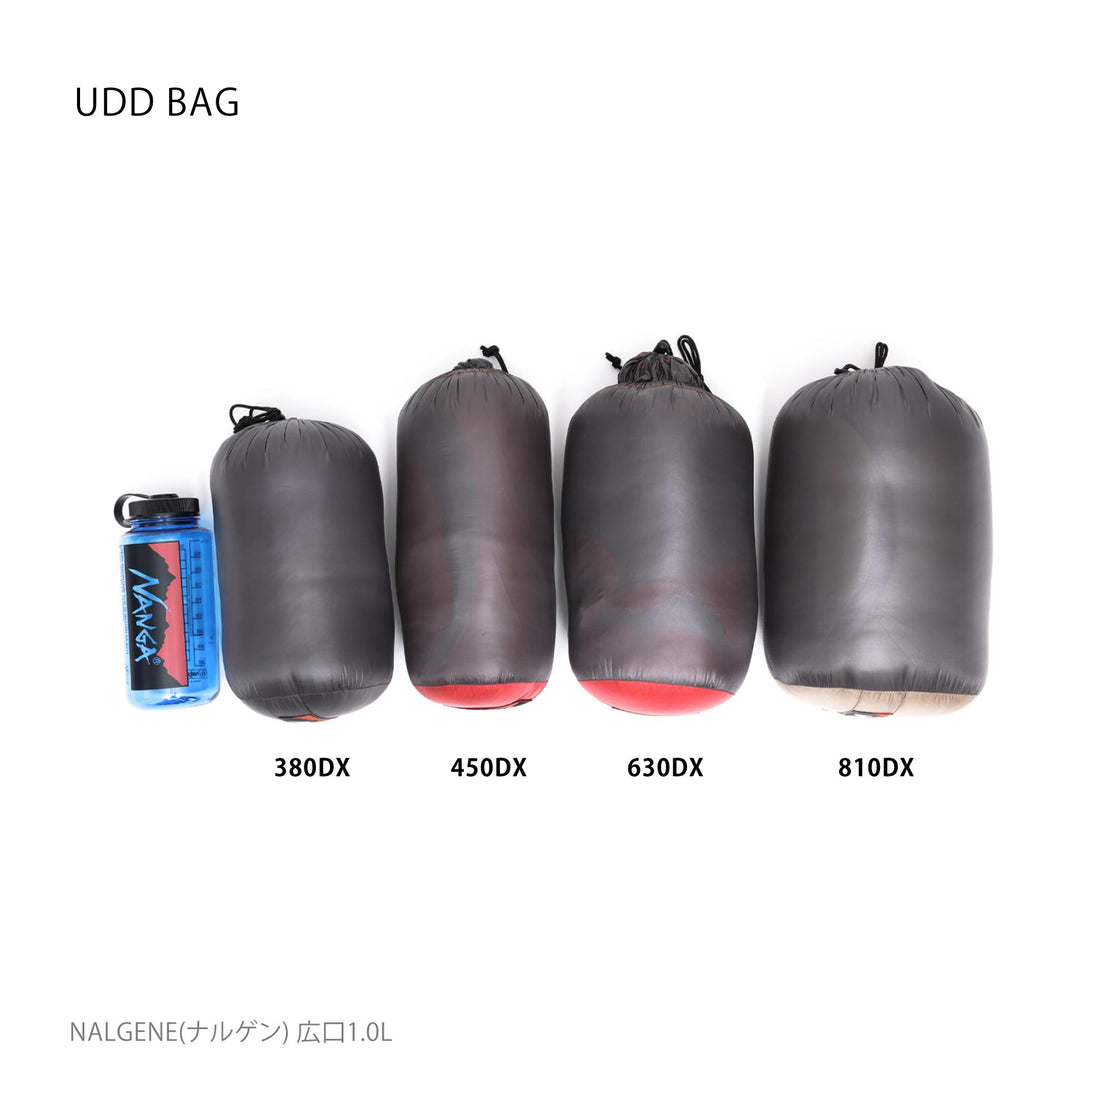 UDD BAG 810DX